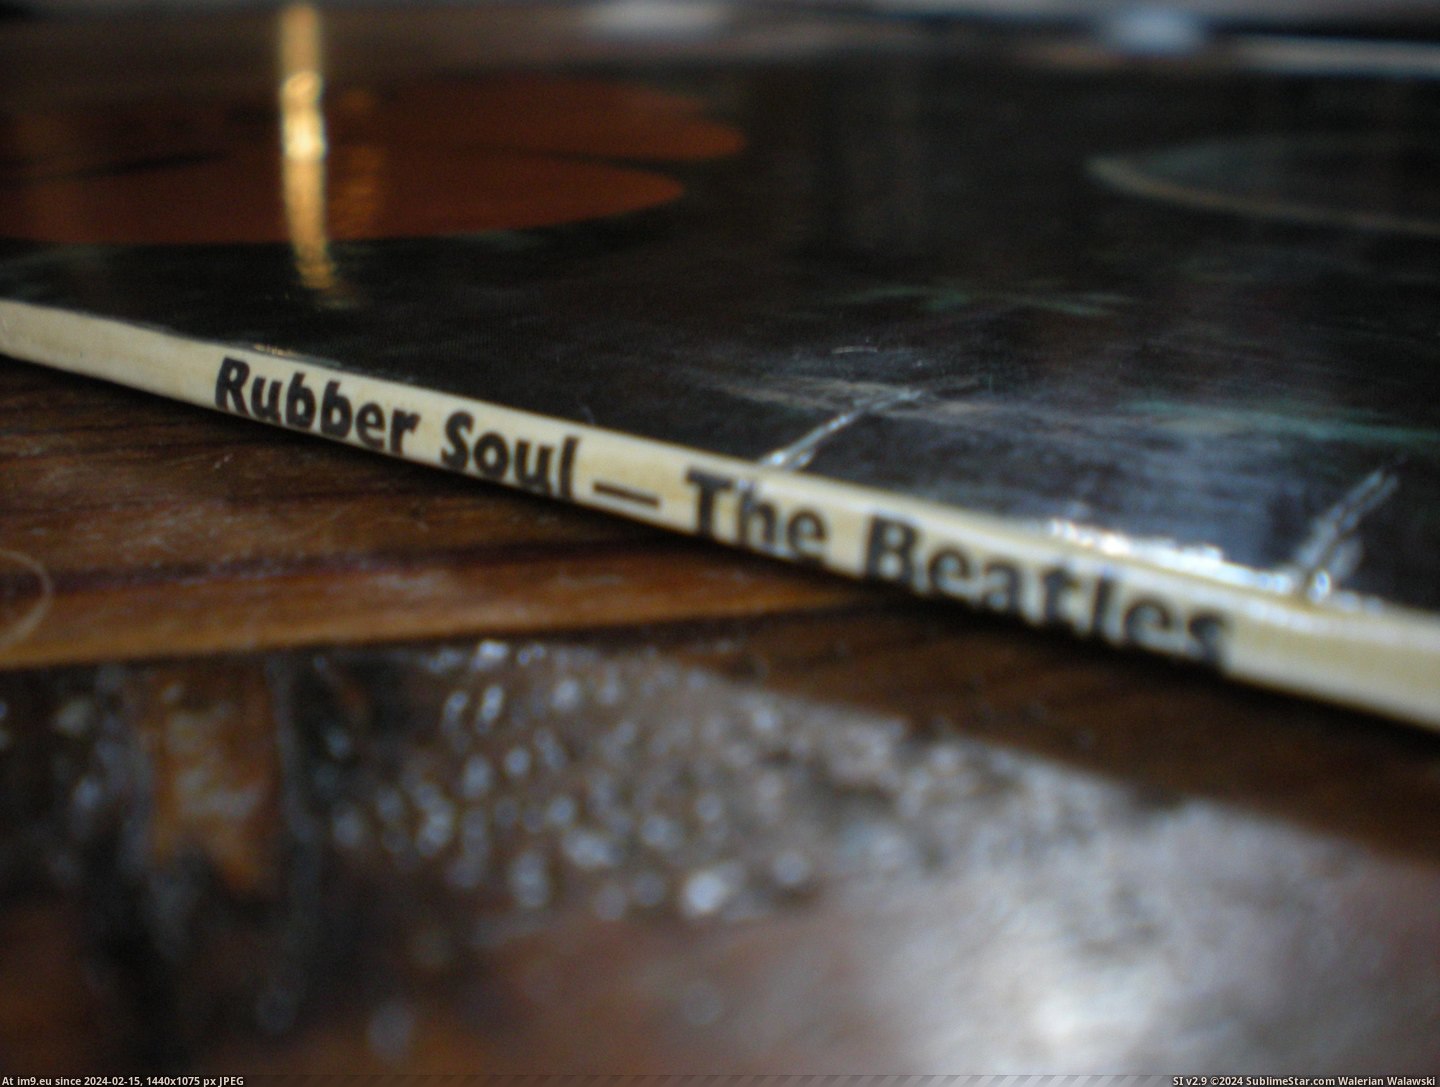  #Rubber  Rubber -4-4 8 Pic. (Изображение из альбом new 1))